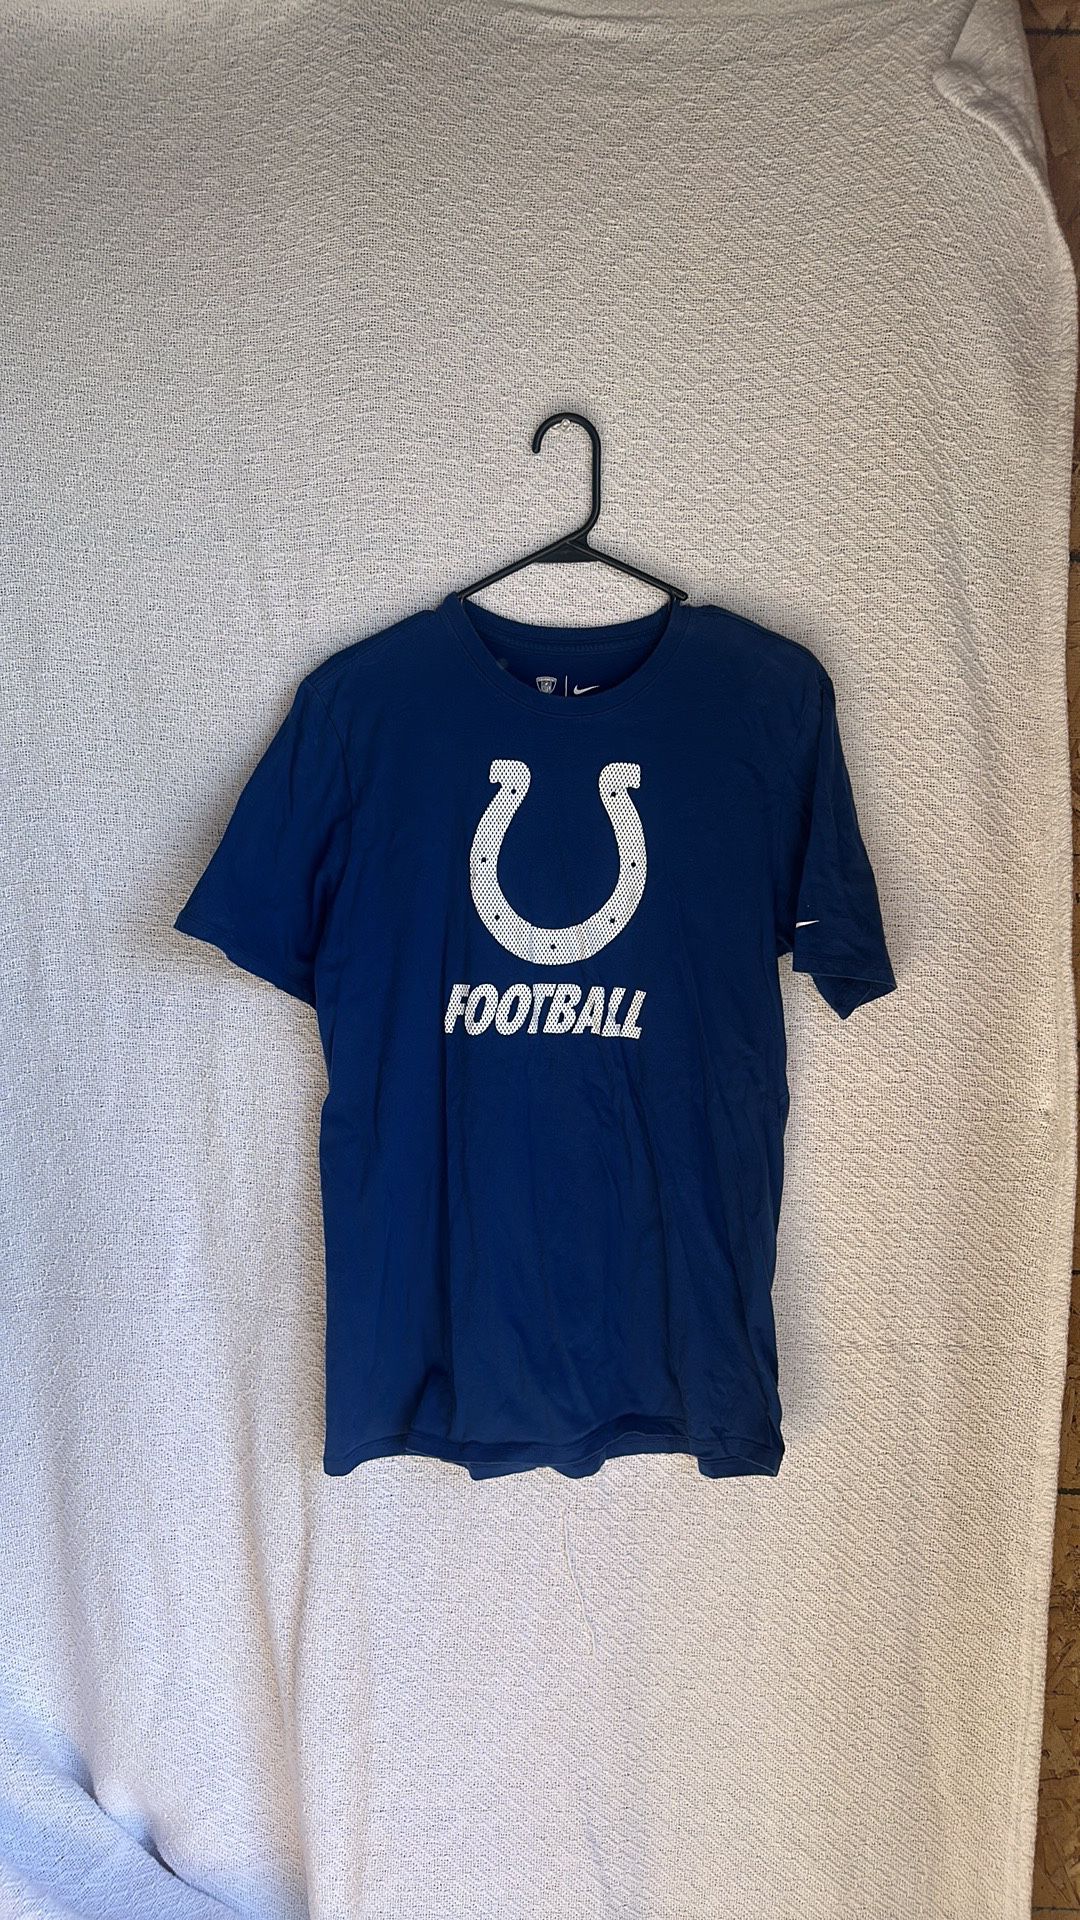 Colts men’s football blue tshirt large